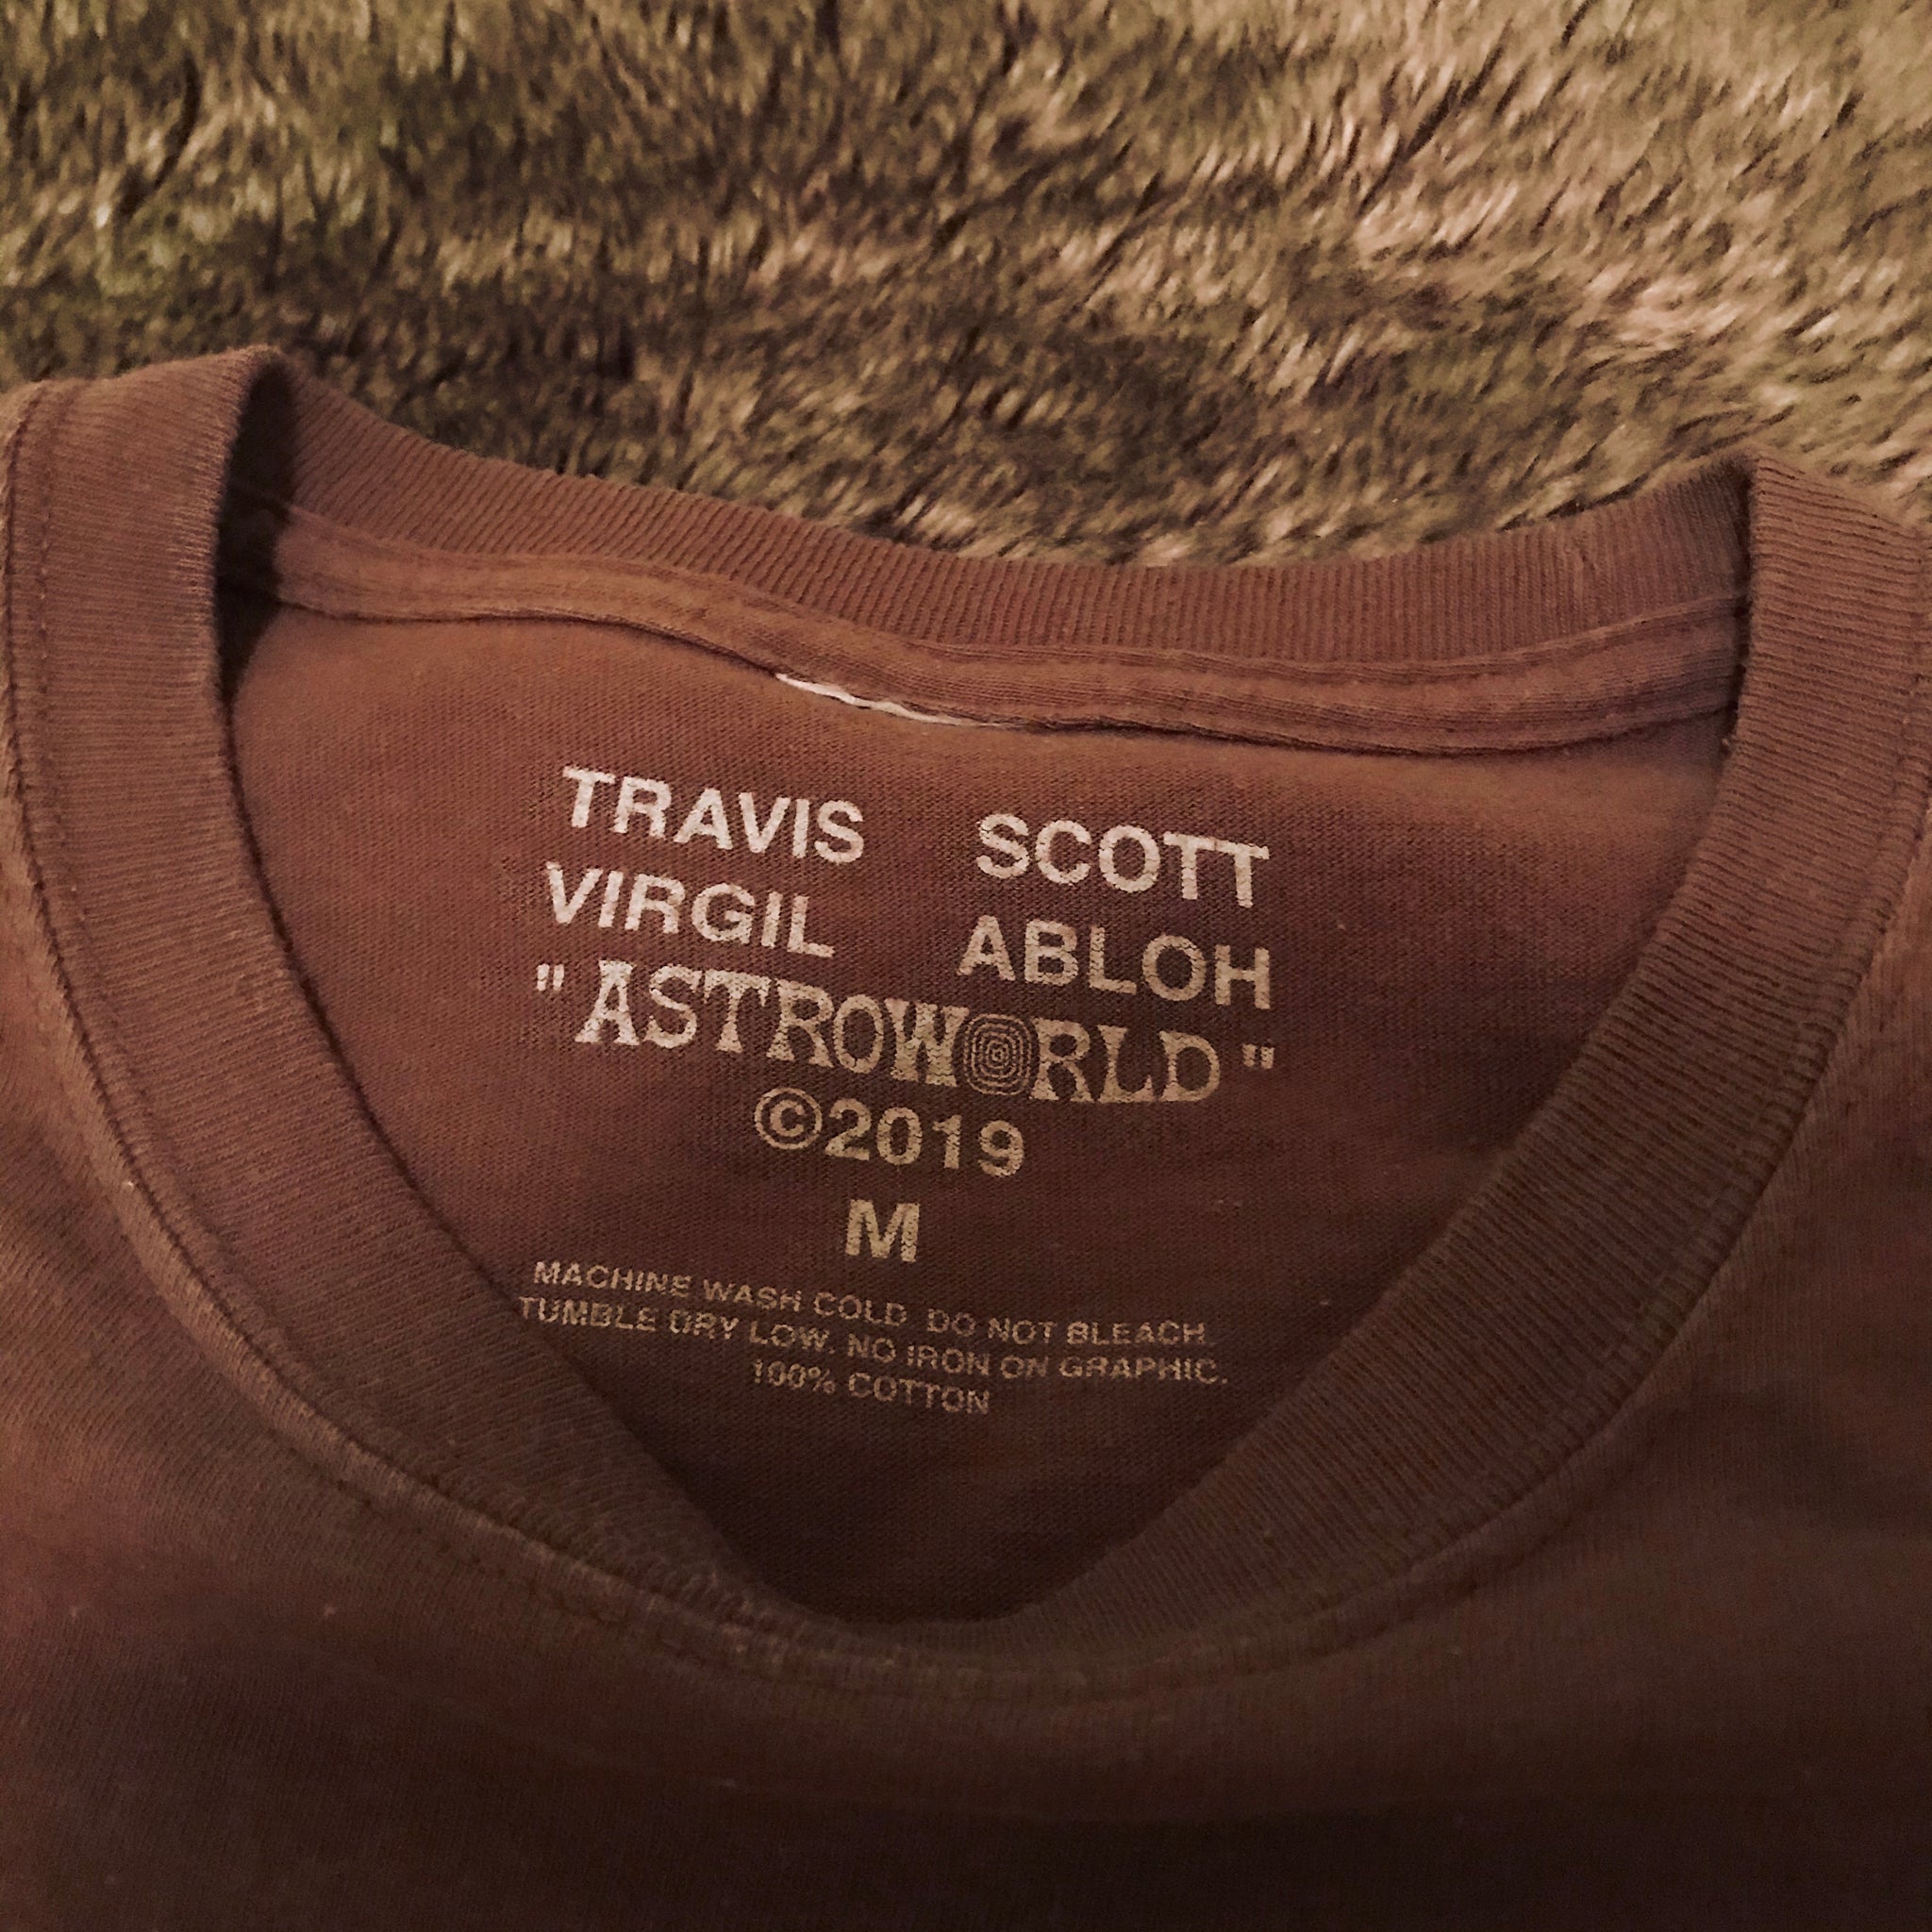 Virgil Abloh designs two t-shirts for Travis Scott